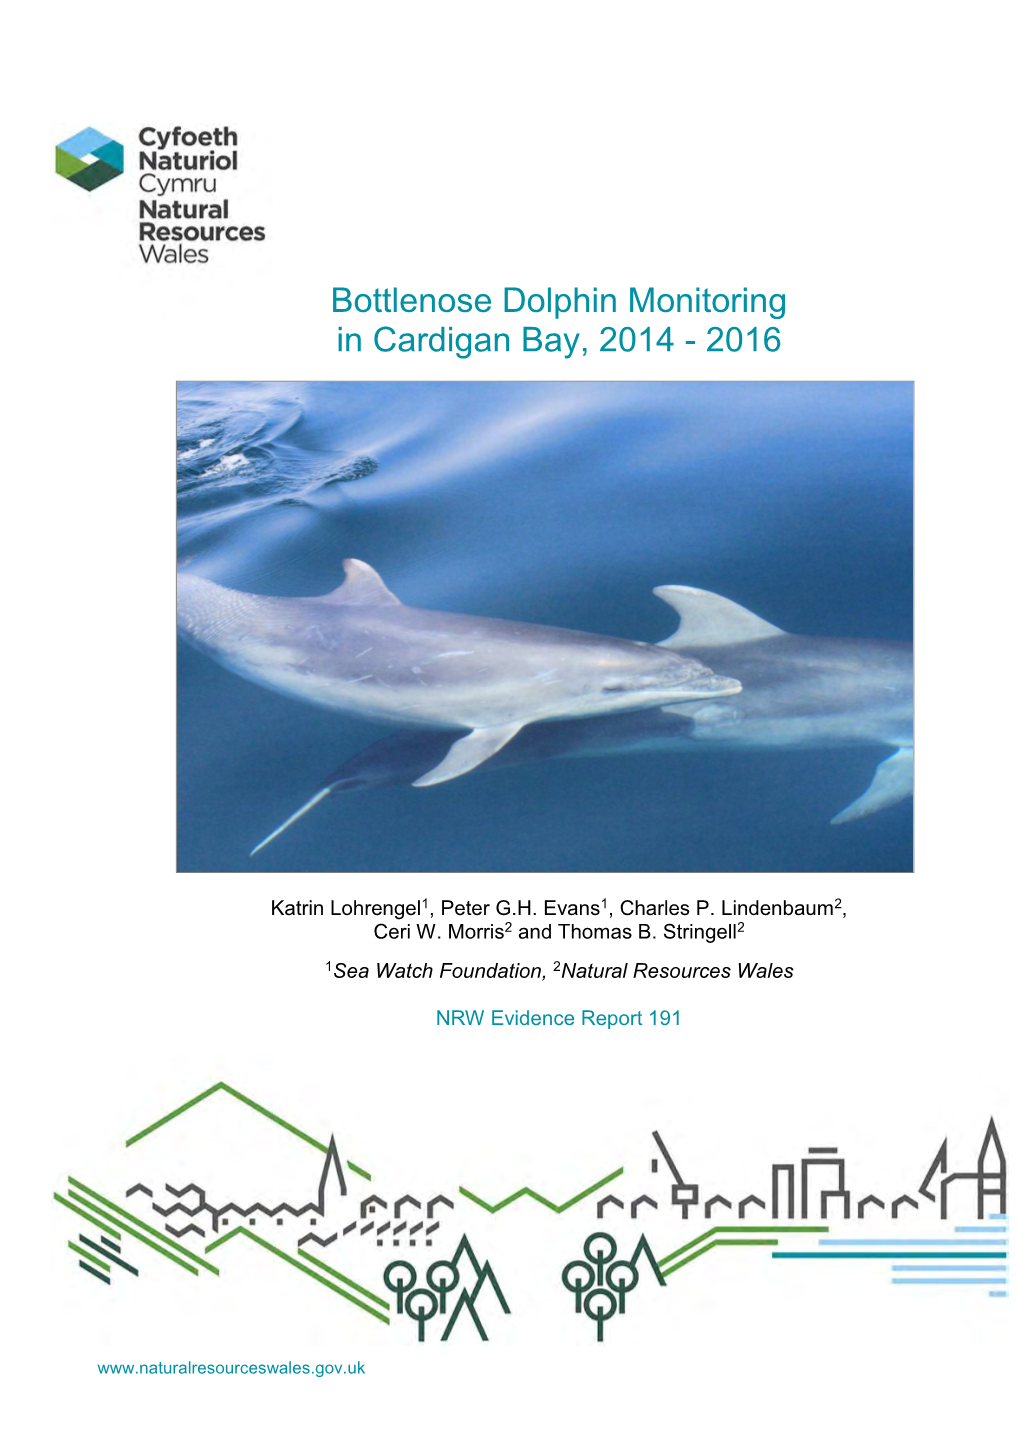 Bottlenose Dolphin Monitoring in Cardigan Bay 2014- 2016 Report